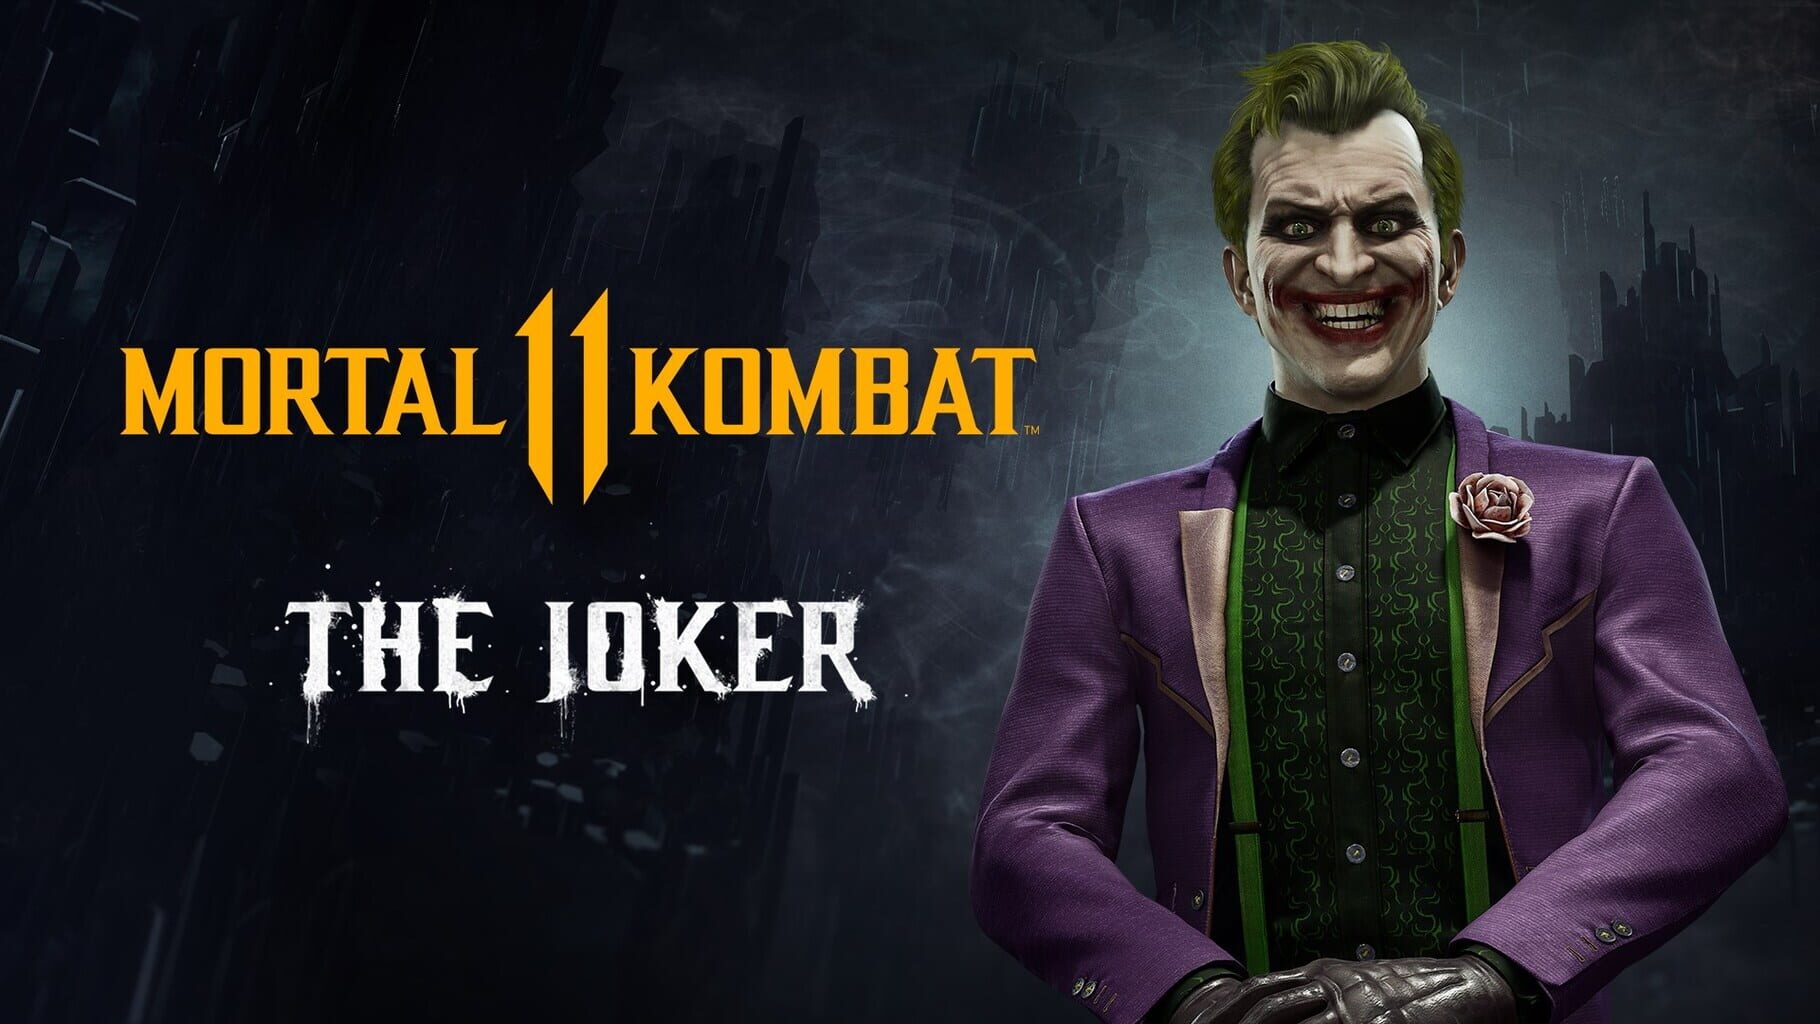 Arte - Mortal Kombat 11: The Joker